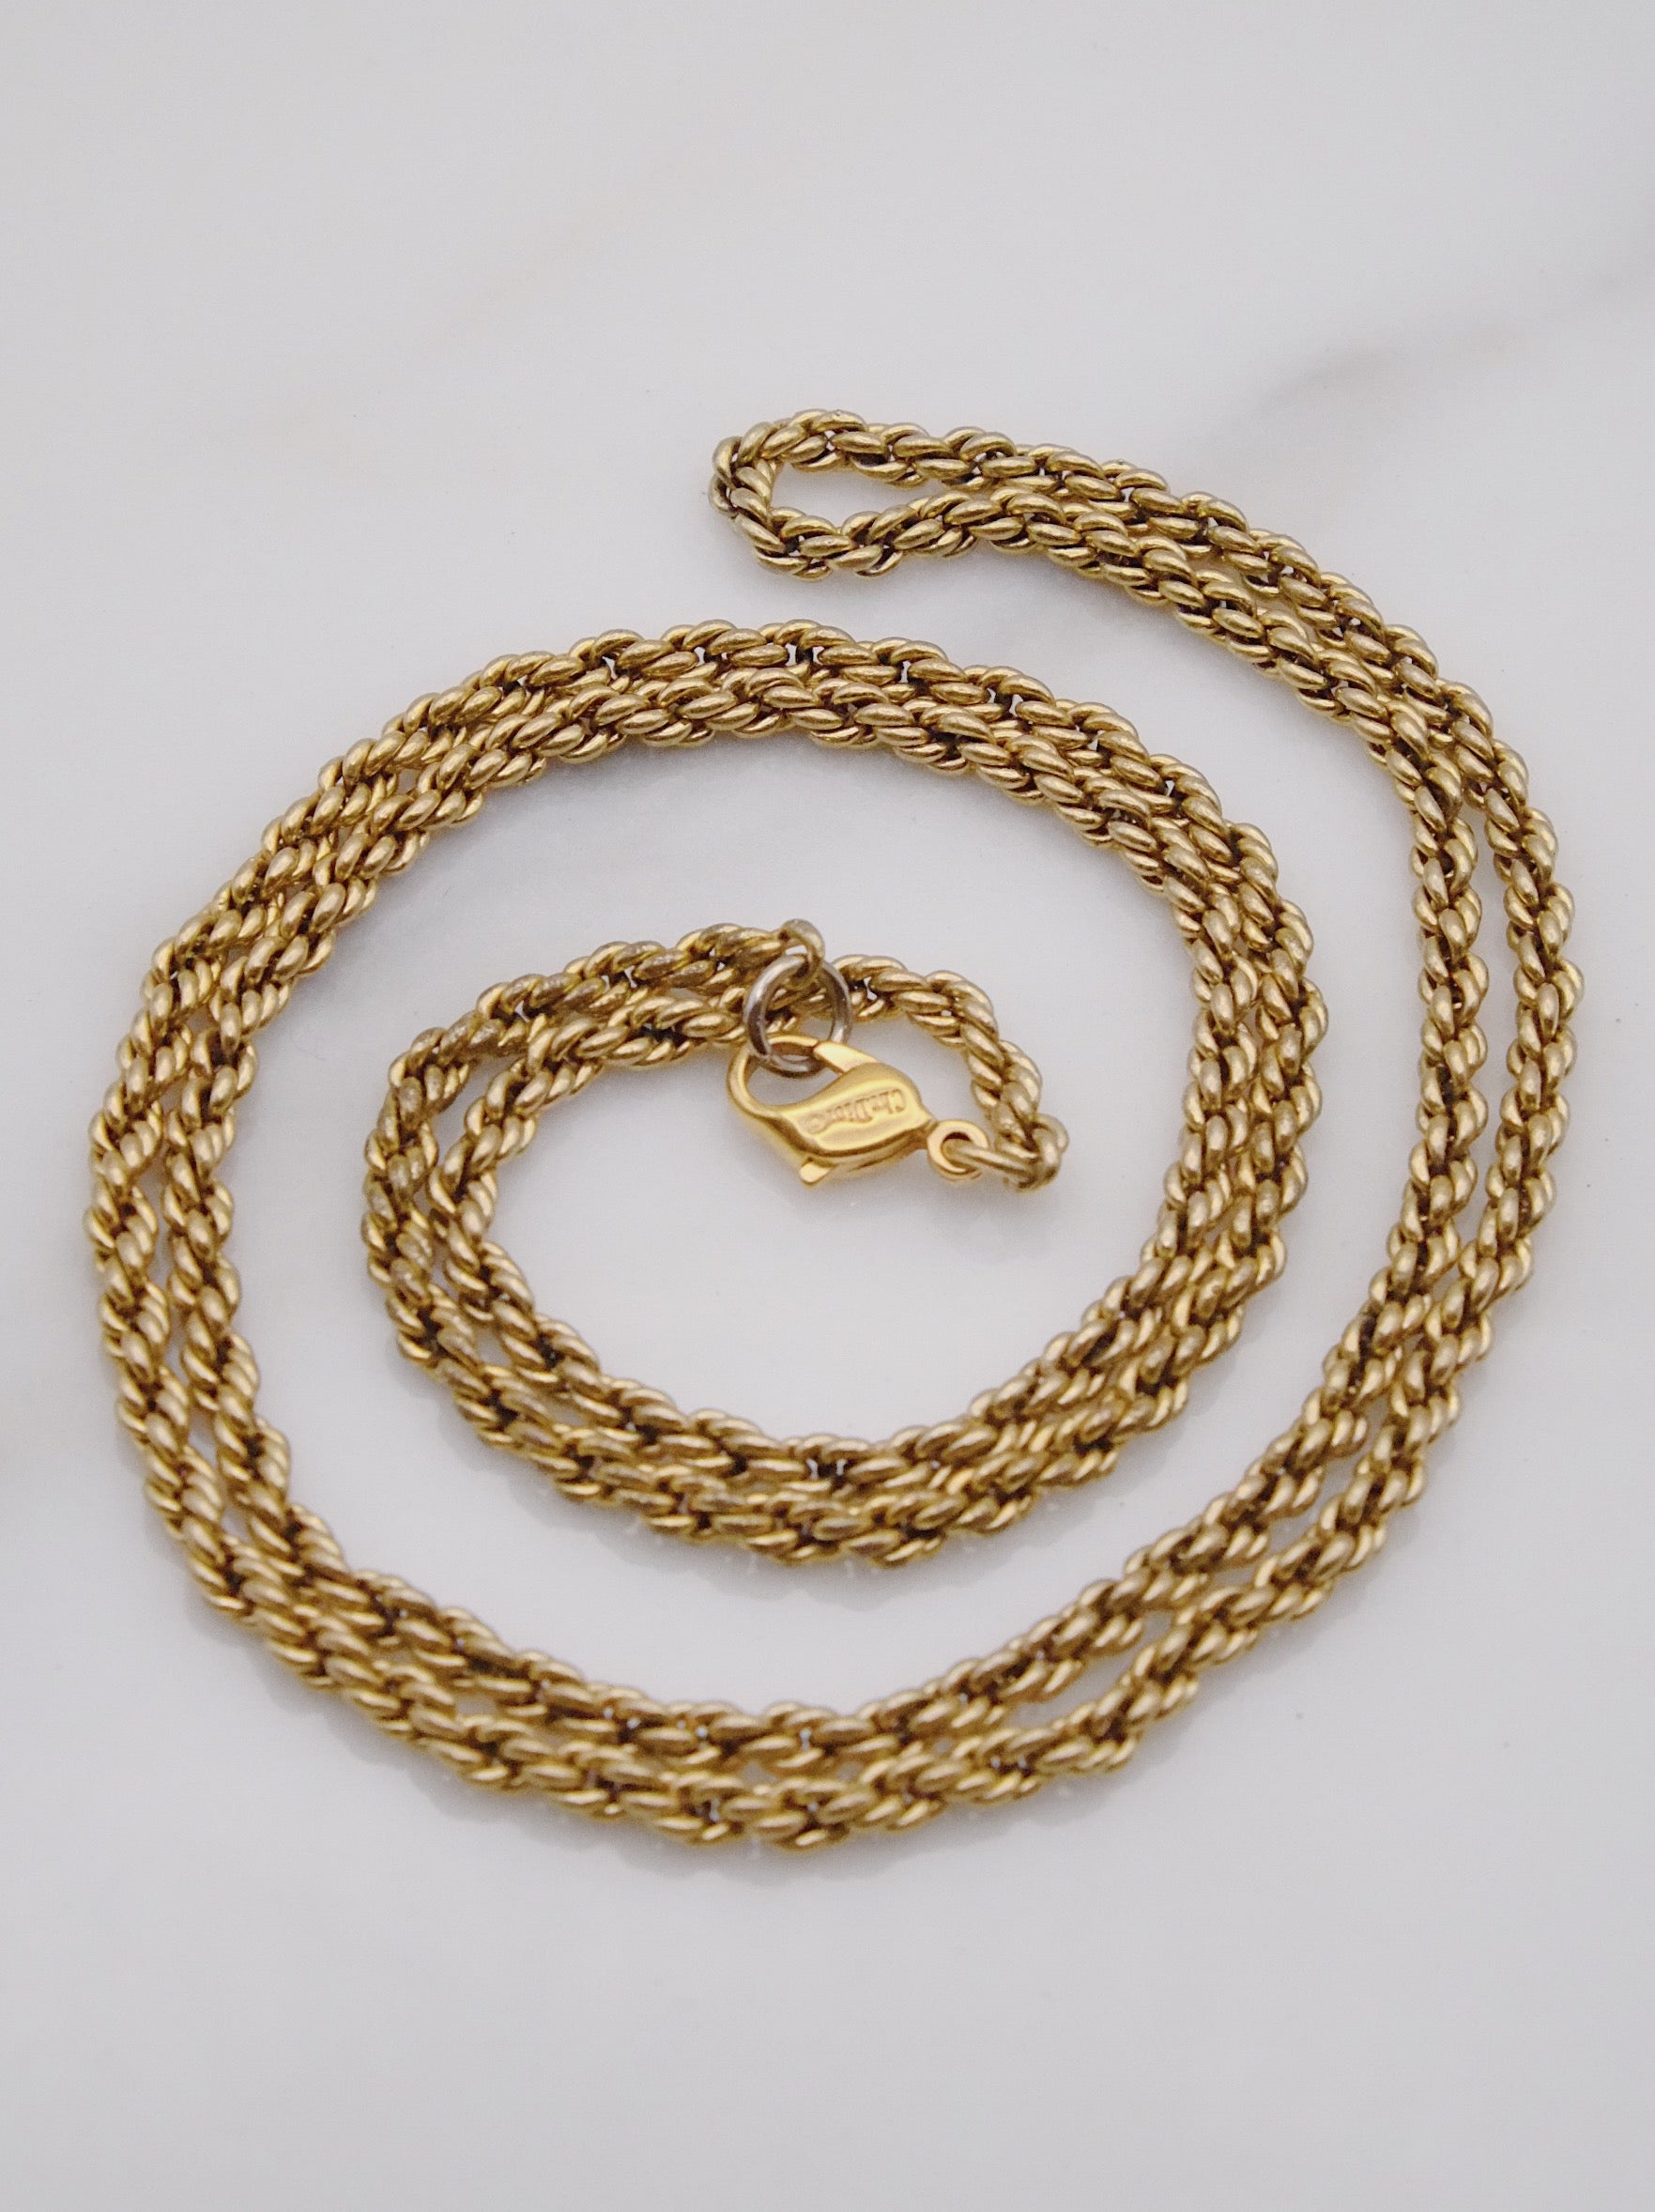 Vintage CHRISTIAN DIOR Gold Tone Rhinestone Choker Necklace  eBay